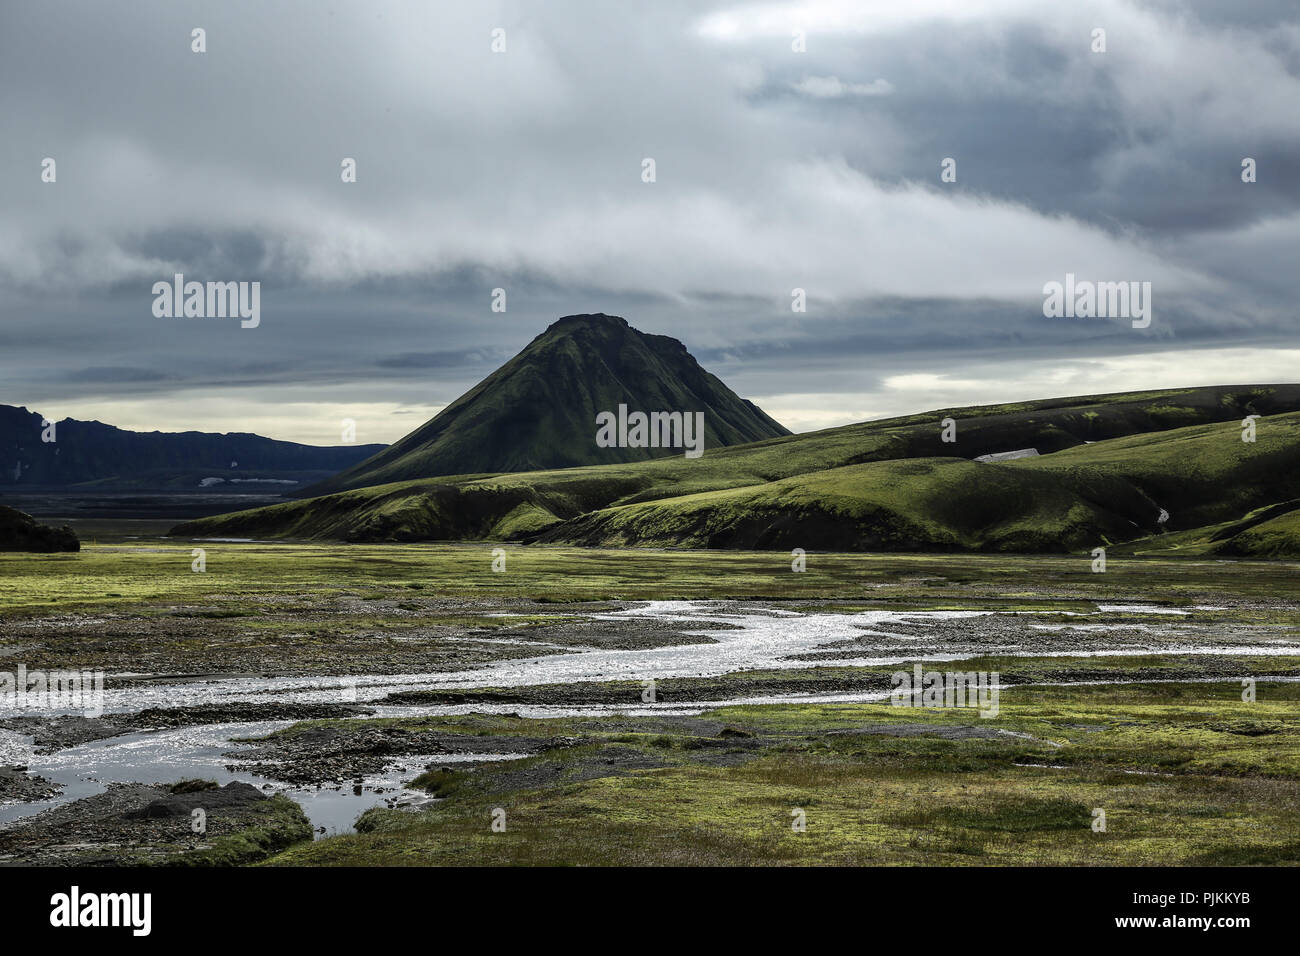 Iceland, Fjallabak, volcanic cone Maellifell, Holmsa River, Holmsarbotnar Moorland, gloomy mood, Stock Photo